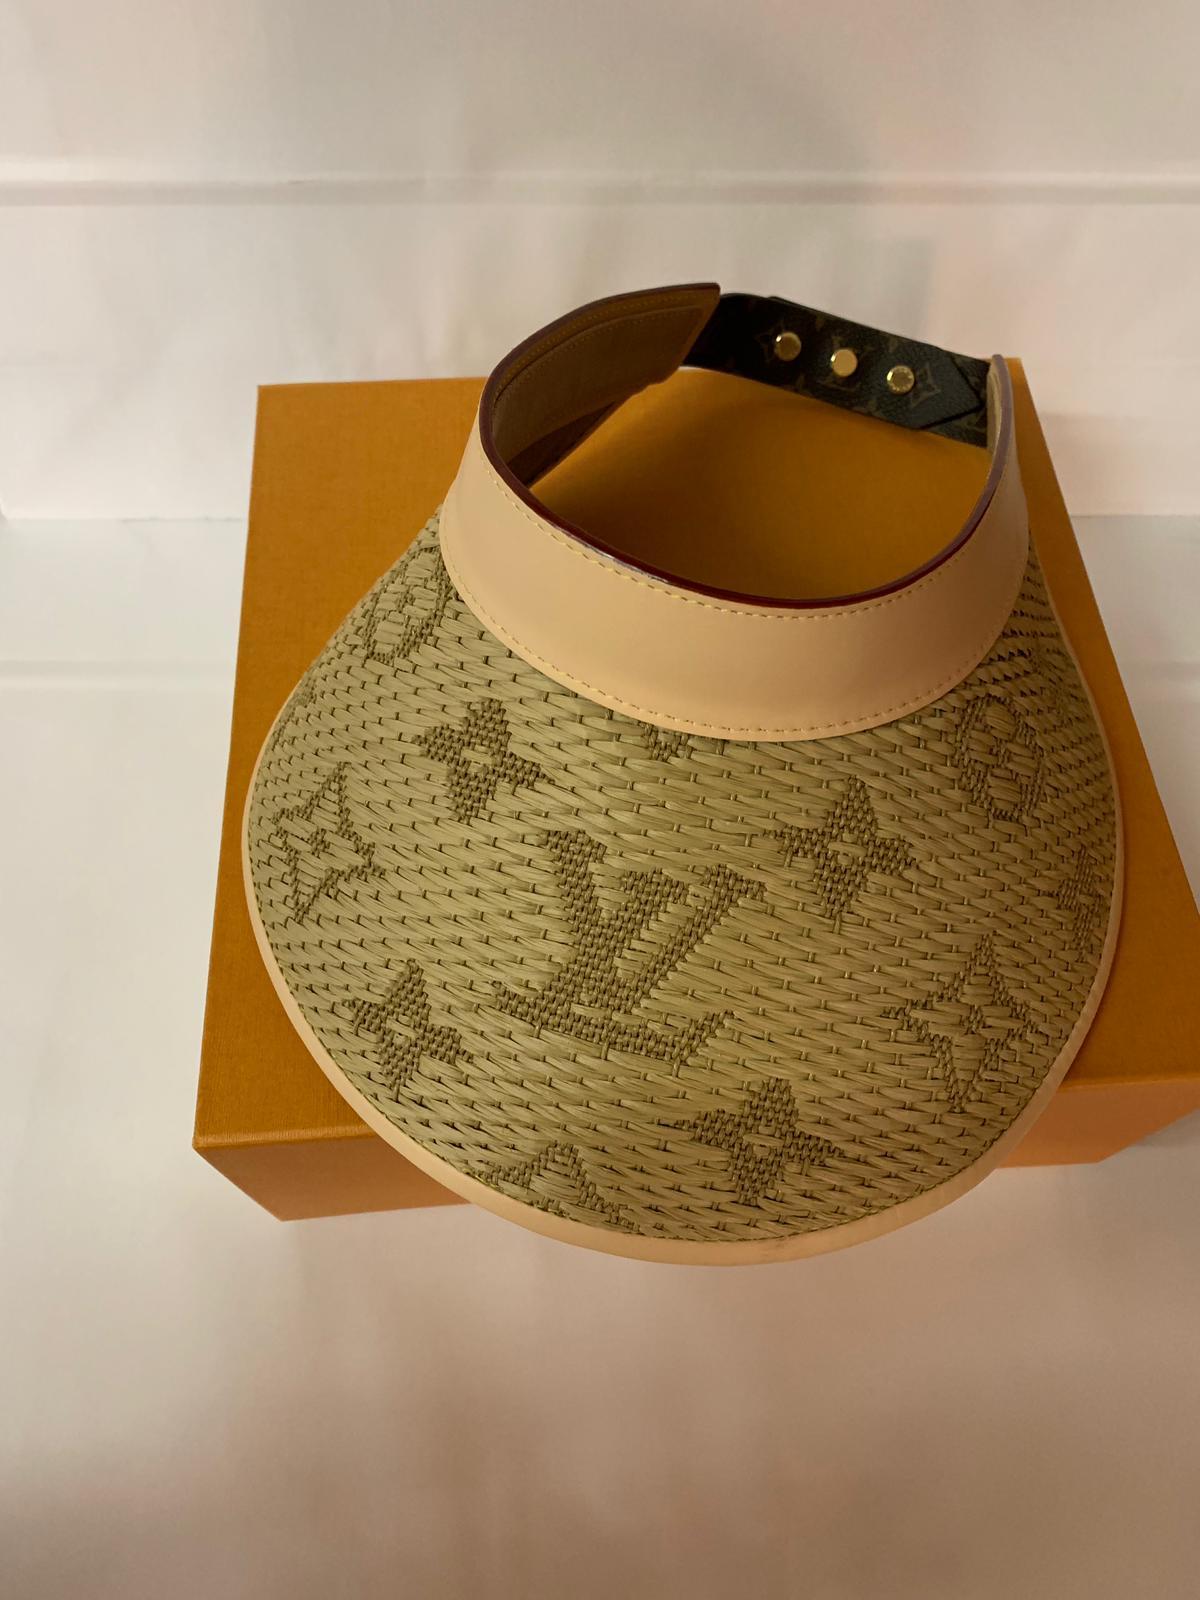 Louis Vuitton Strawgram, raffia visor with monogram closure.
One size with original box.